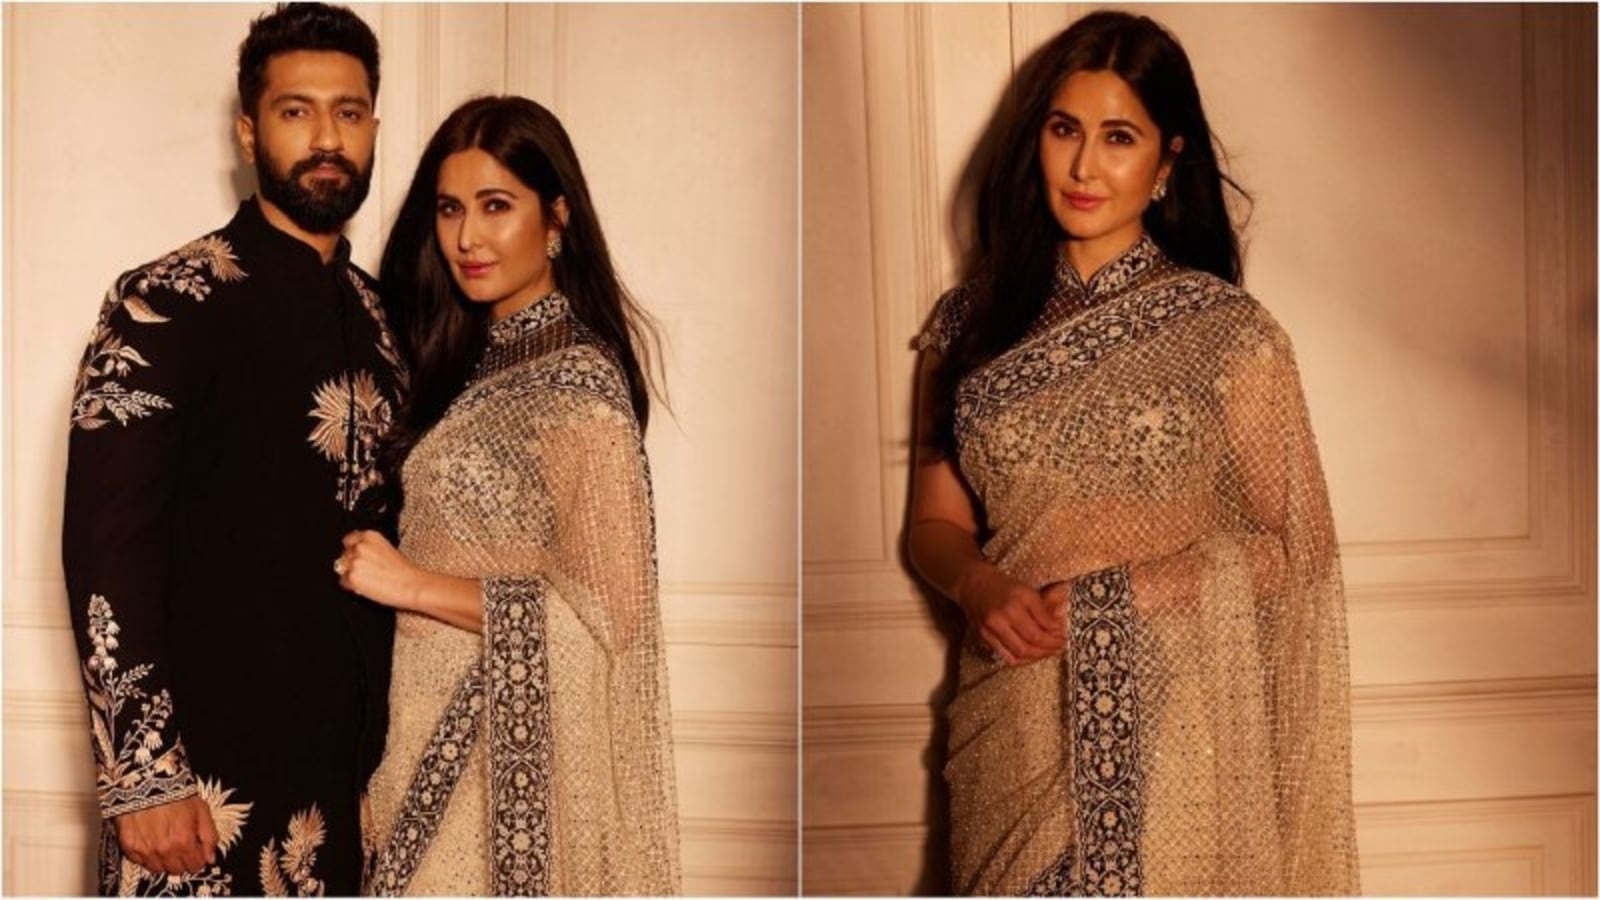 Katrina Kaif draped in six yards, Vicky Kaushal in elegant bandh gala kurta prove they are the most stylish couple: Pics